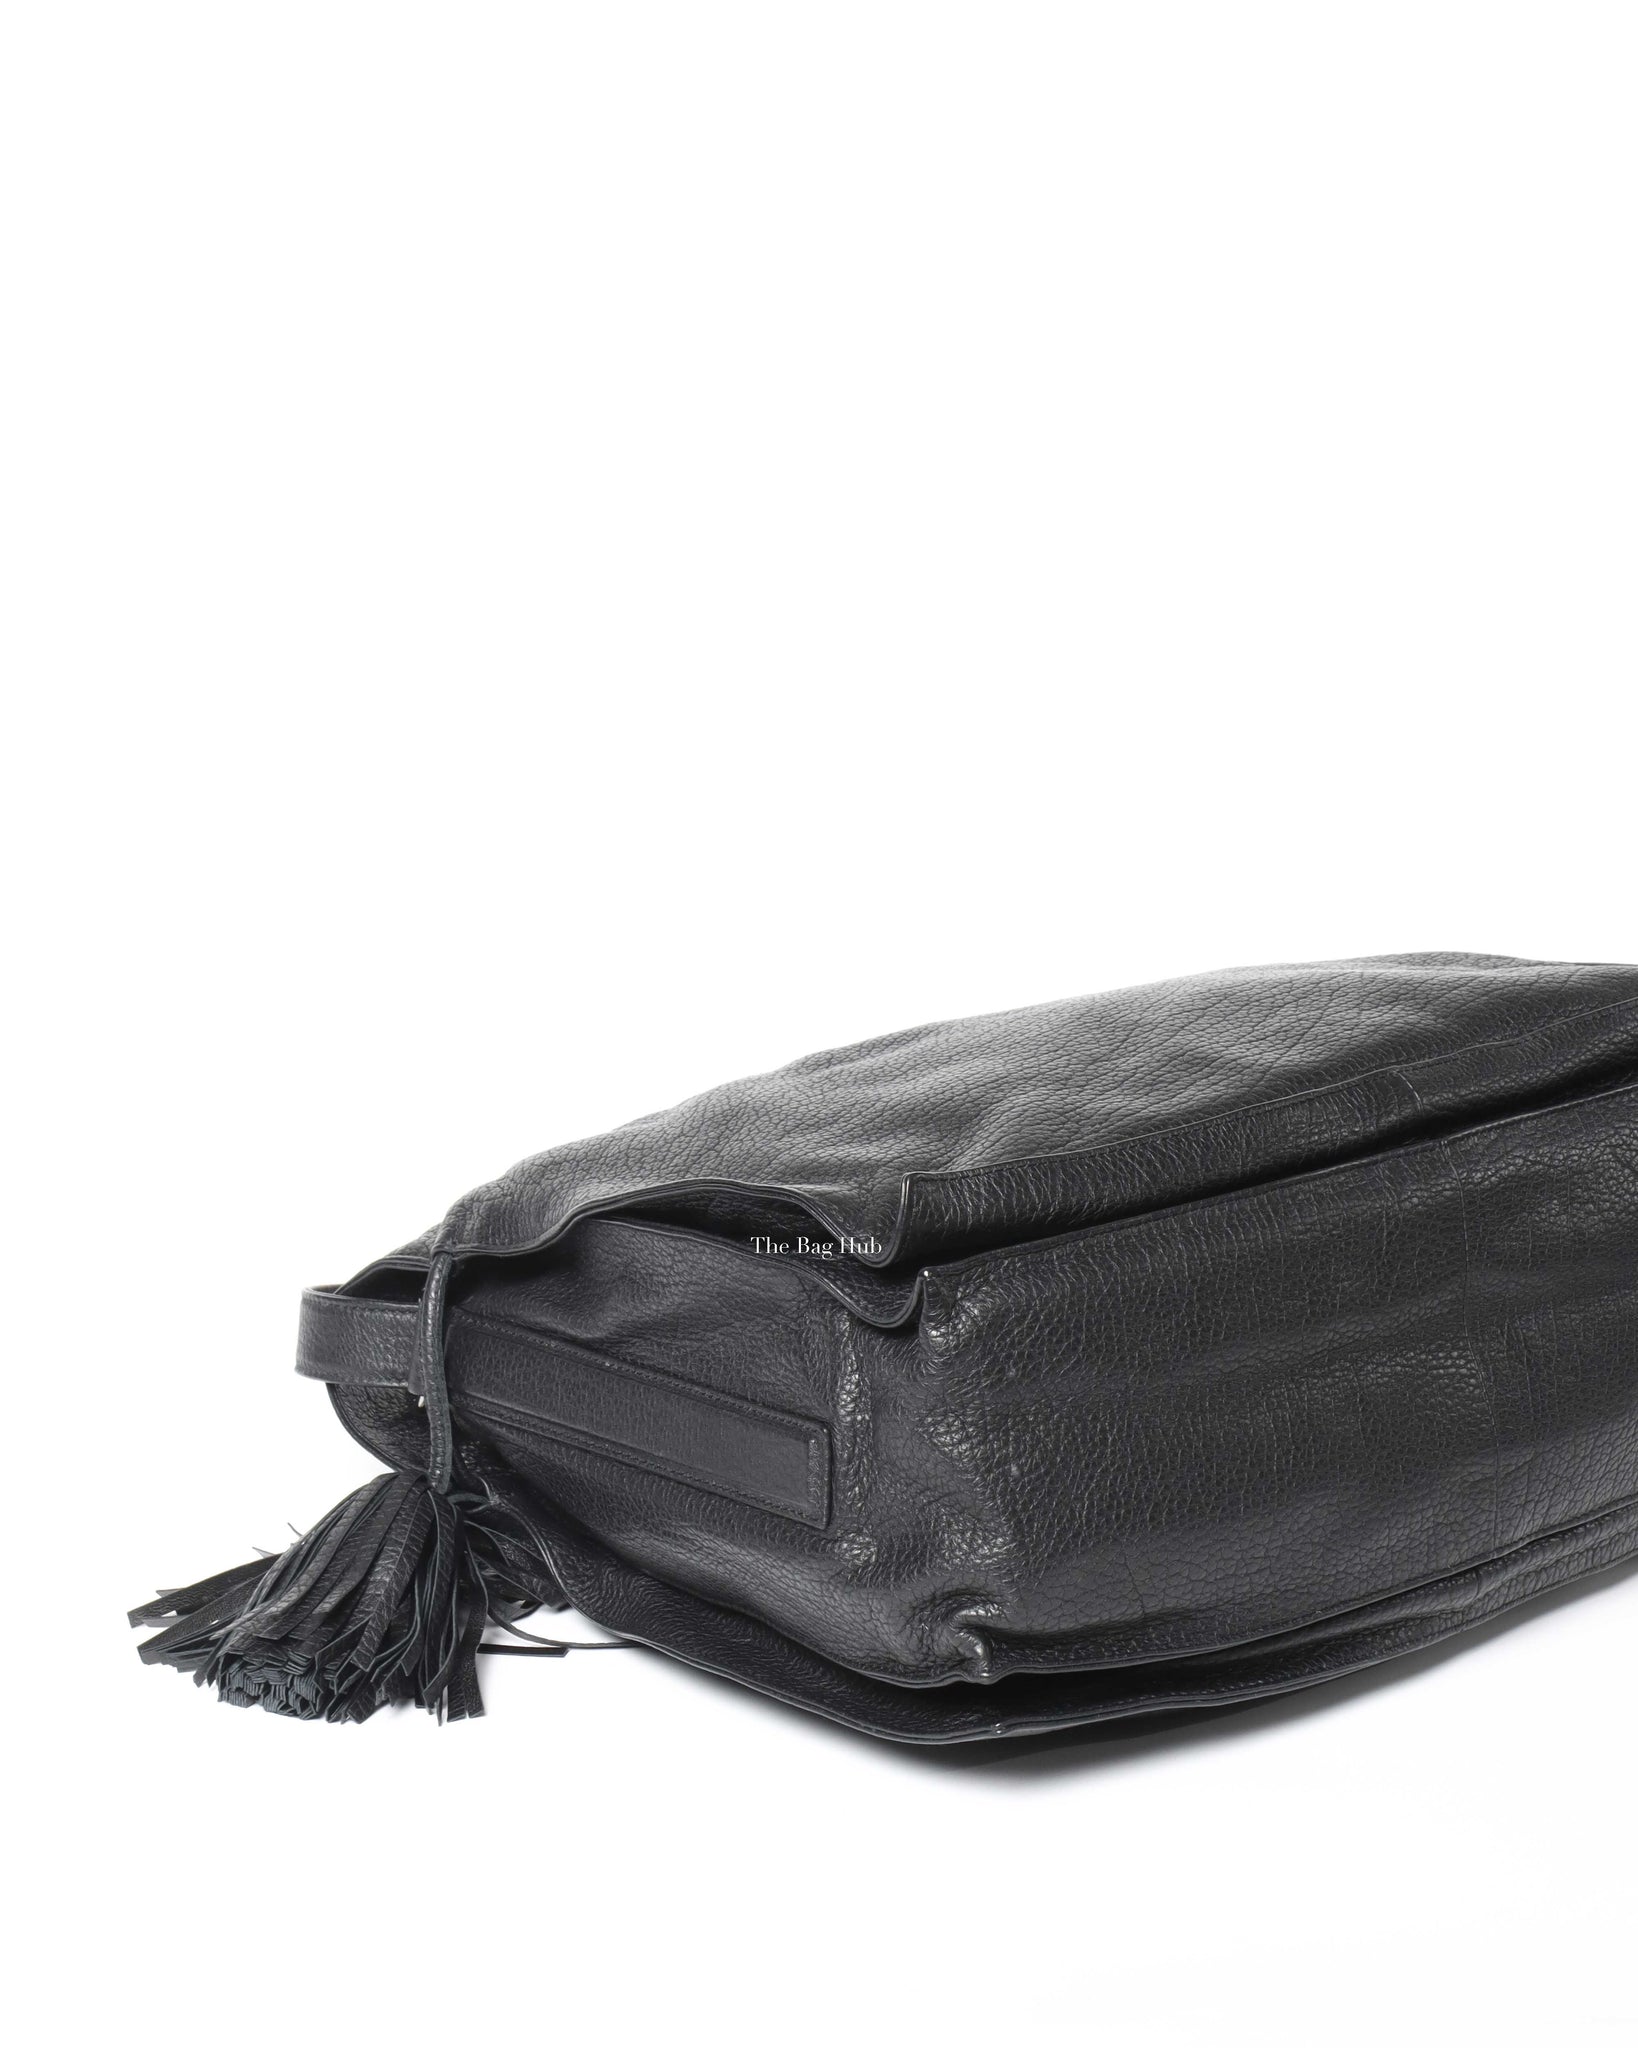 Loewe Black Grained Leather Flamenco Tassel Bag OS-9